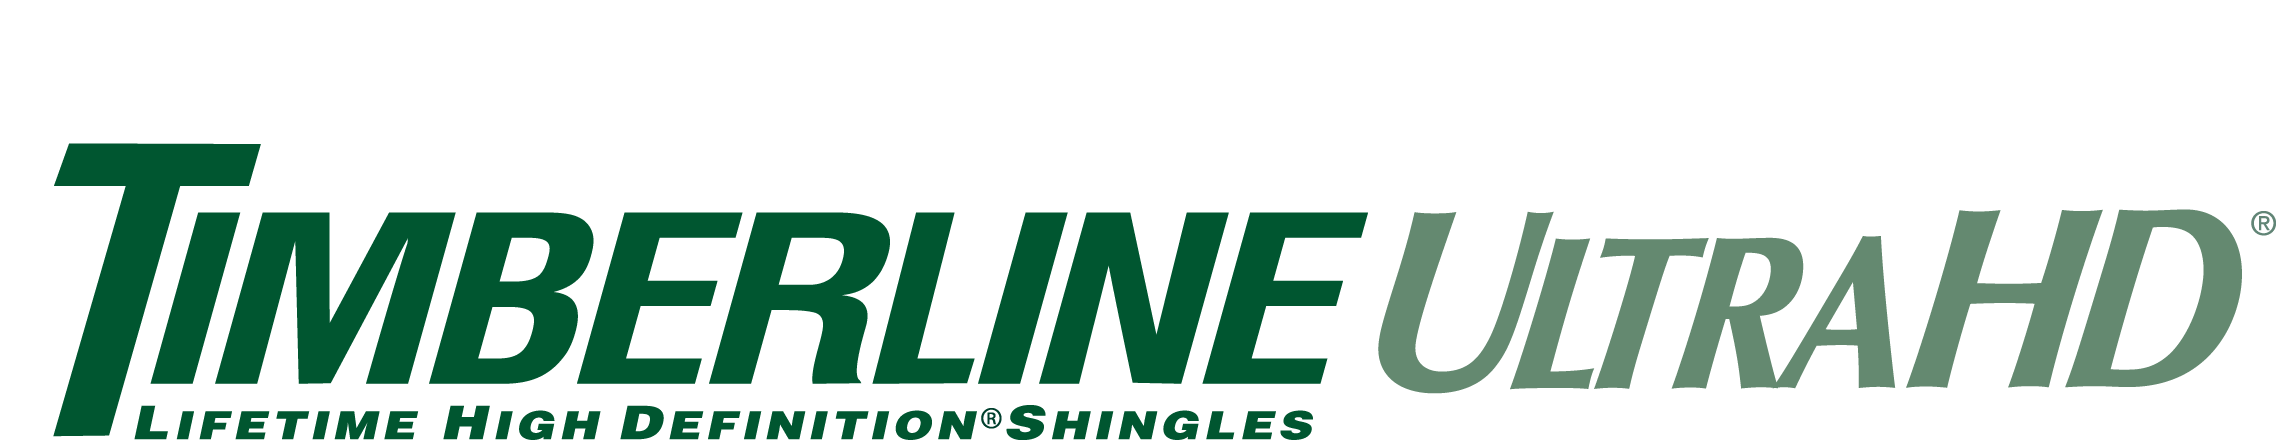 Imberline Ultra HD Shingles logo